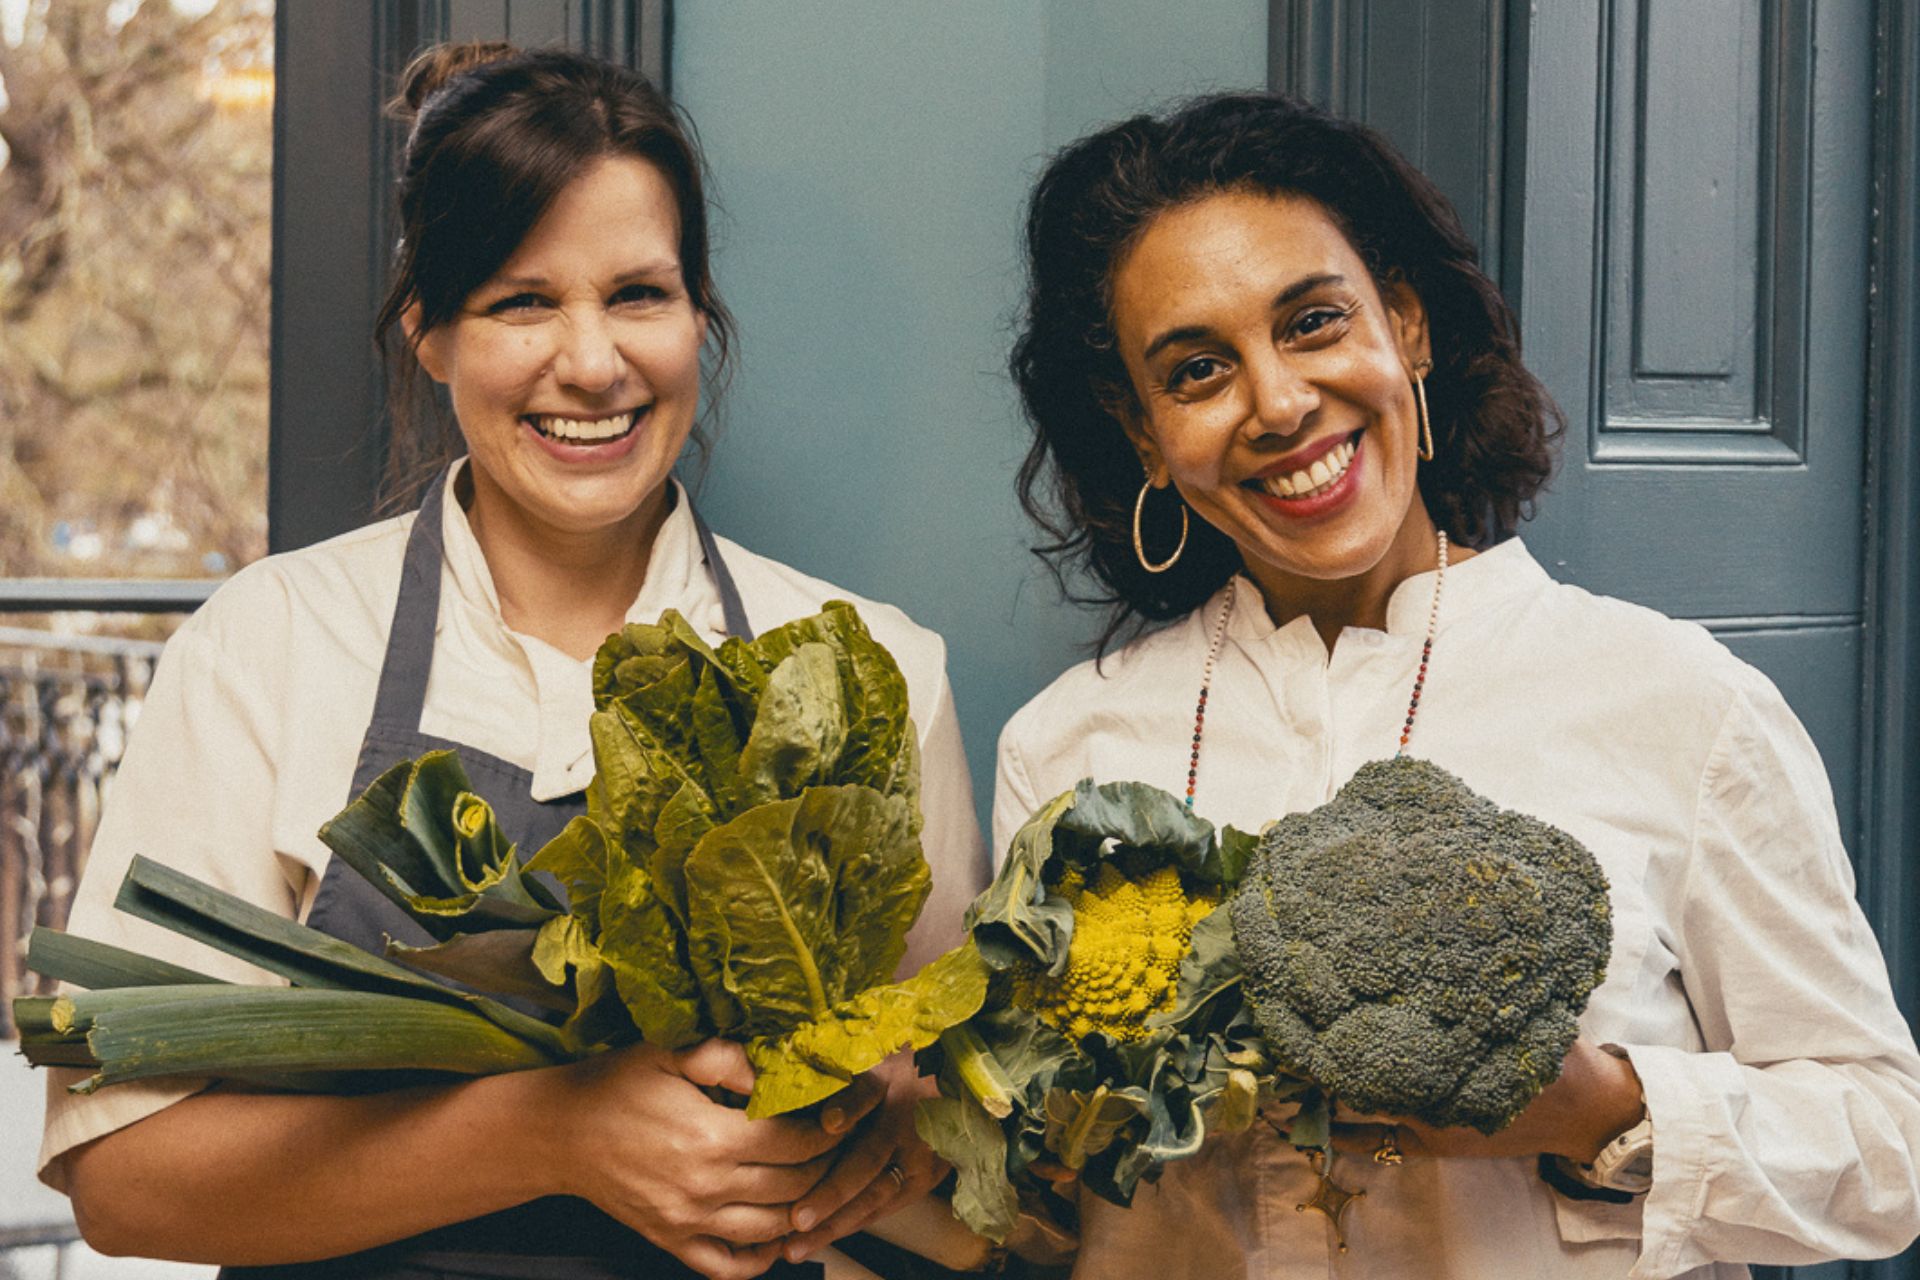 Vanessa Marx and Samantha Trinder, co-owner of Bingham Riverhouse, both holding fresh vegetables.